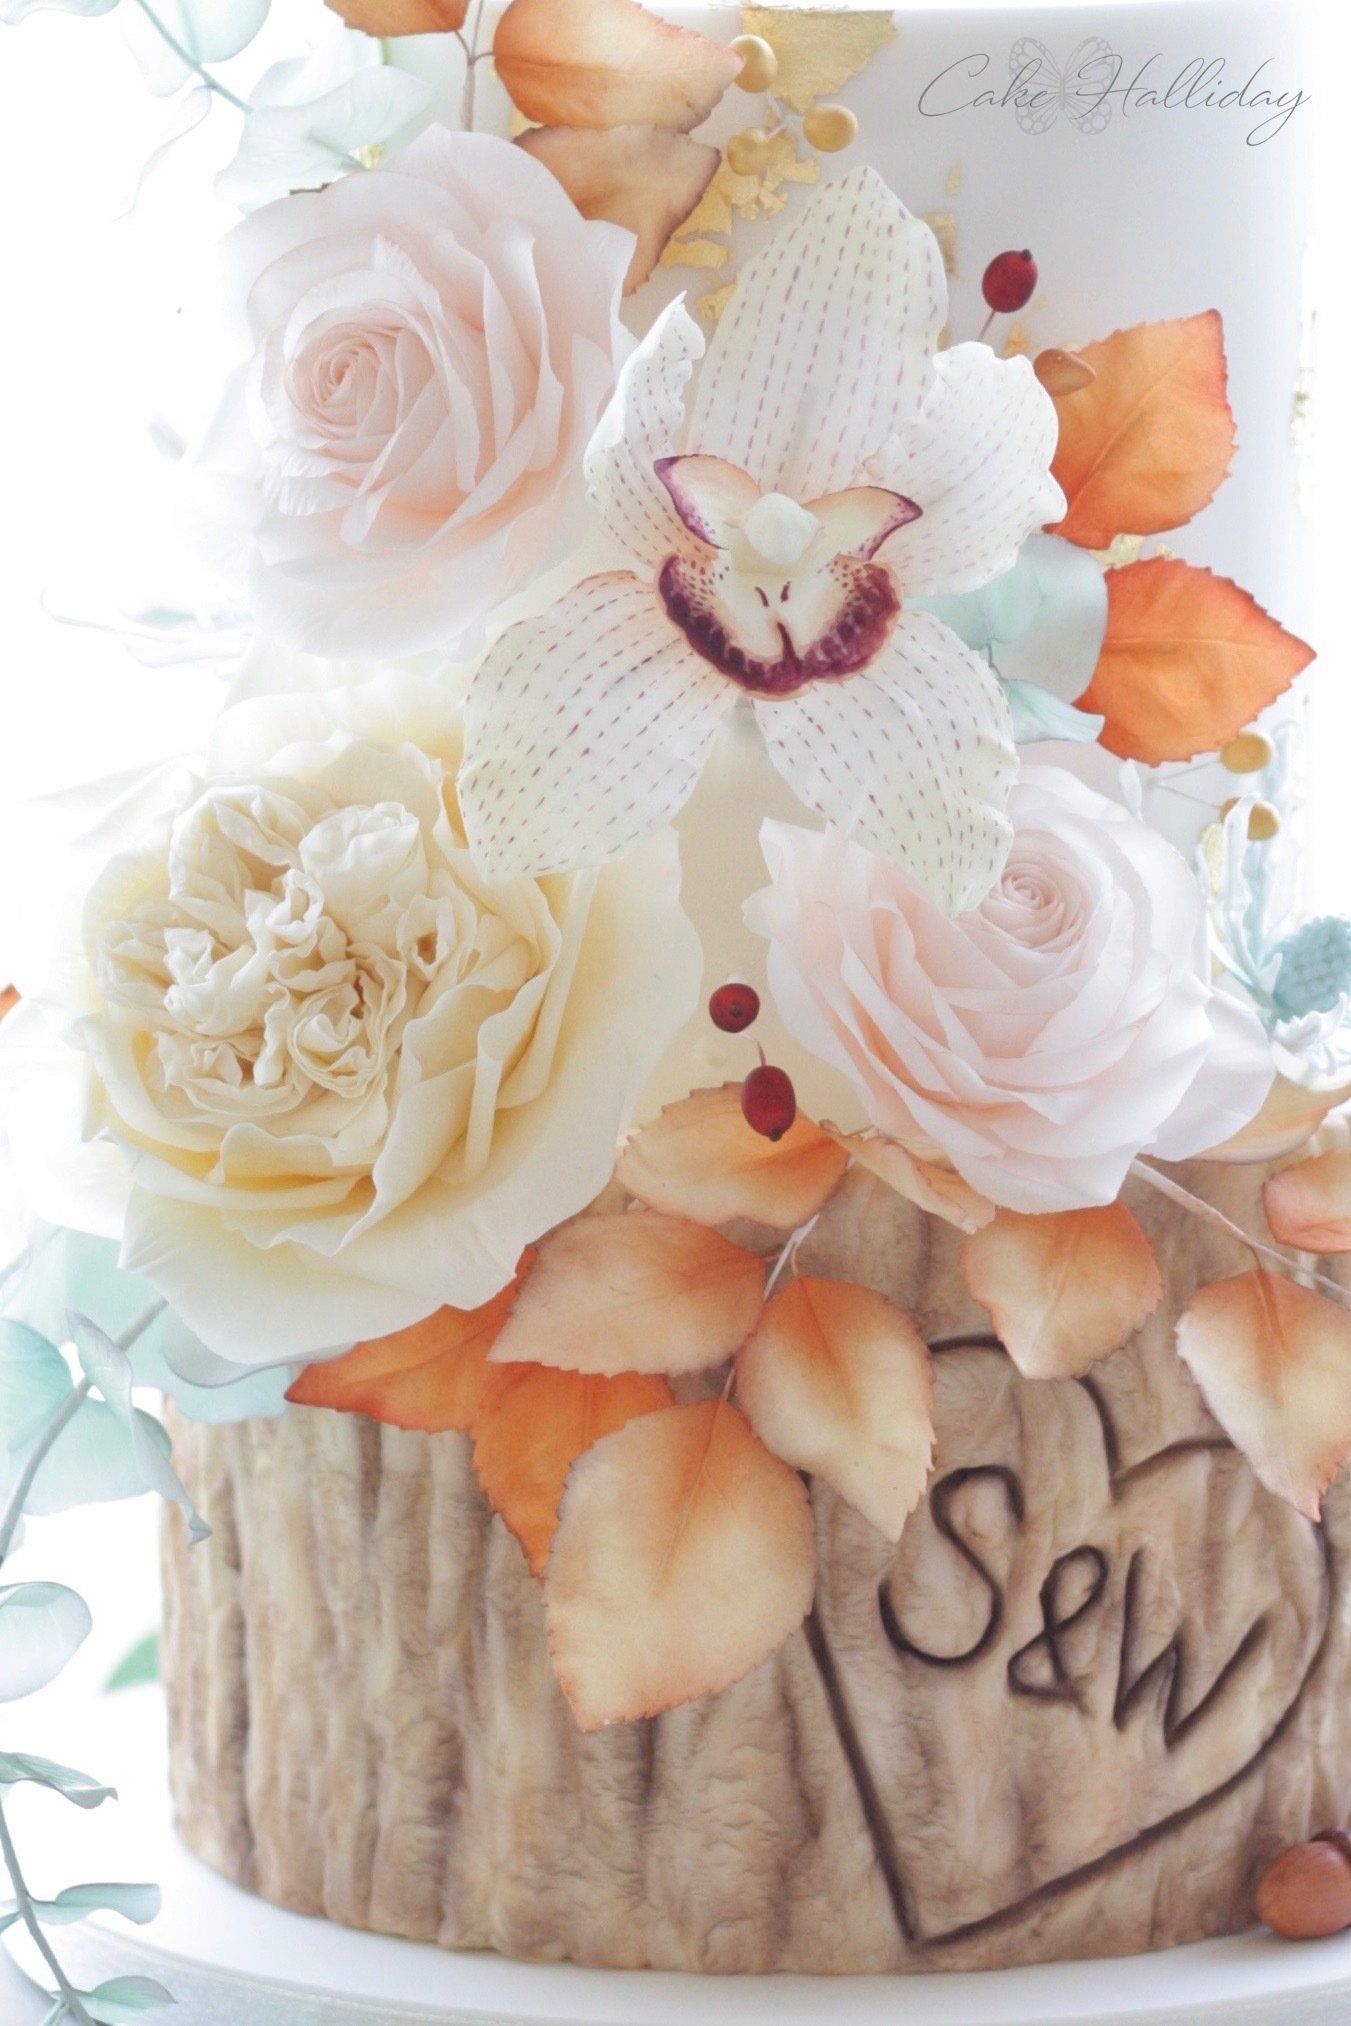 Log tier & sugar flower wedding cake